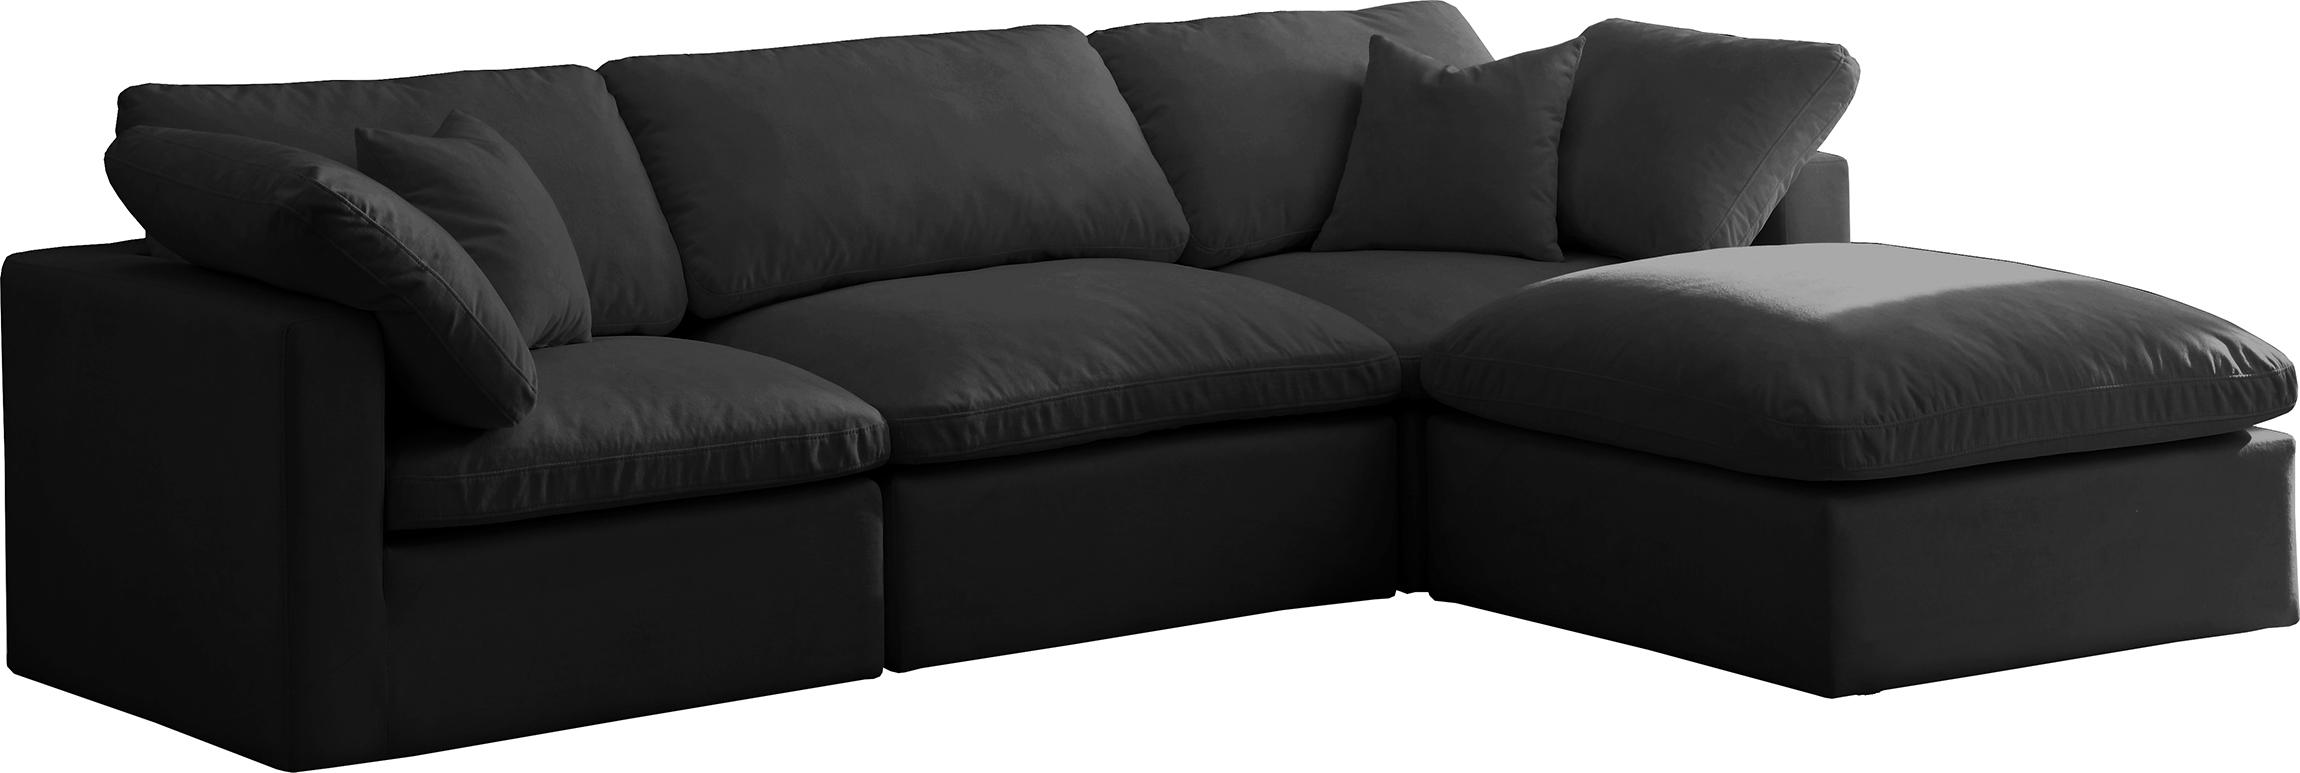 Contemporary, Modern Sectional Sofa 602Black-Sec4A 602Black-Sec4A in Black Fabric